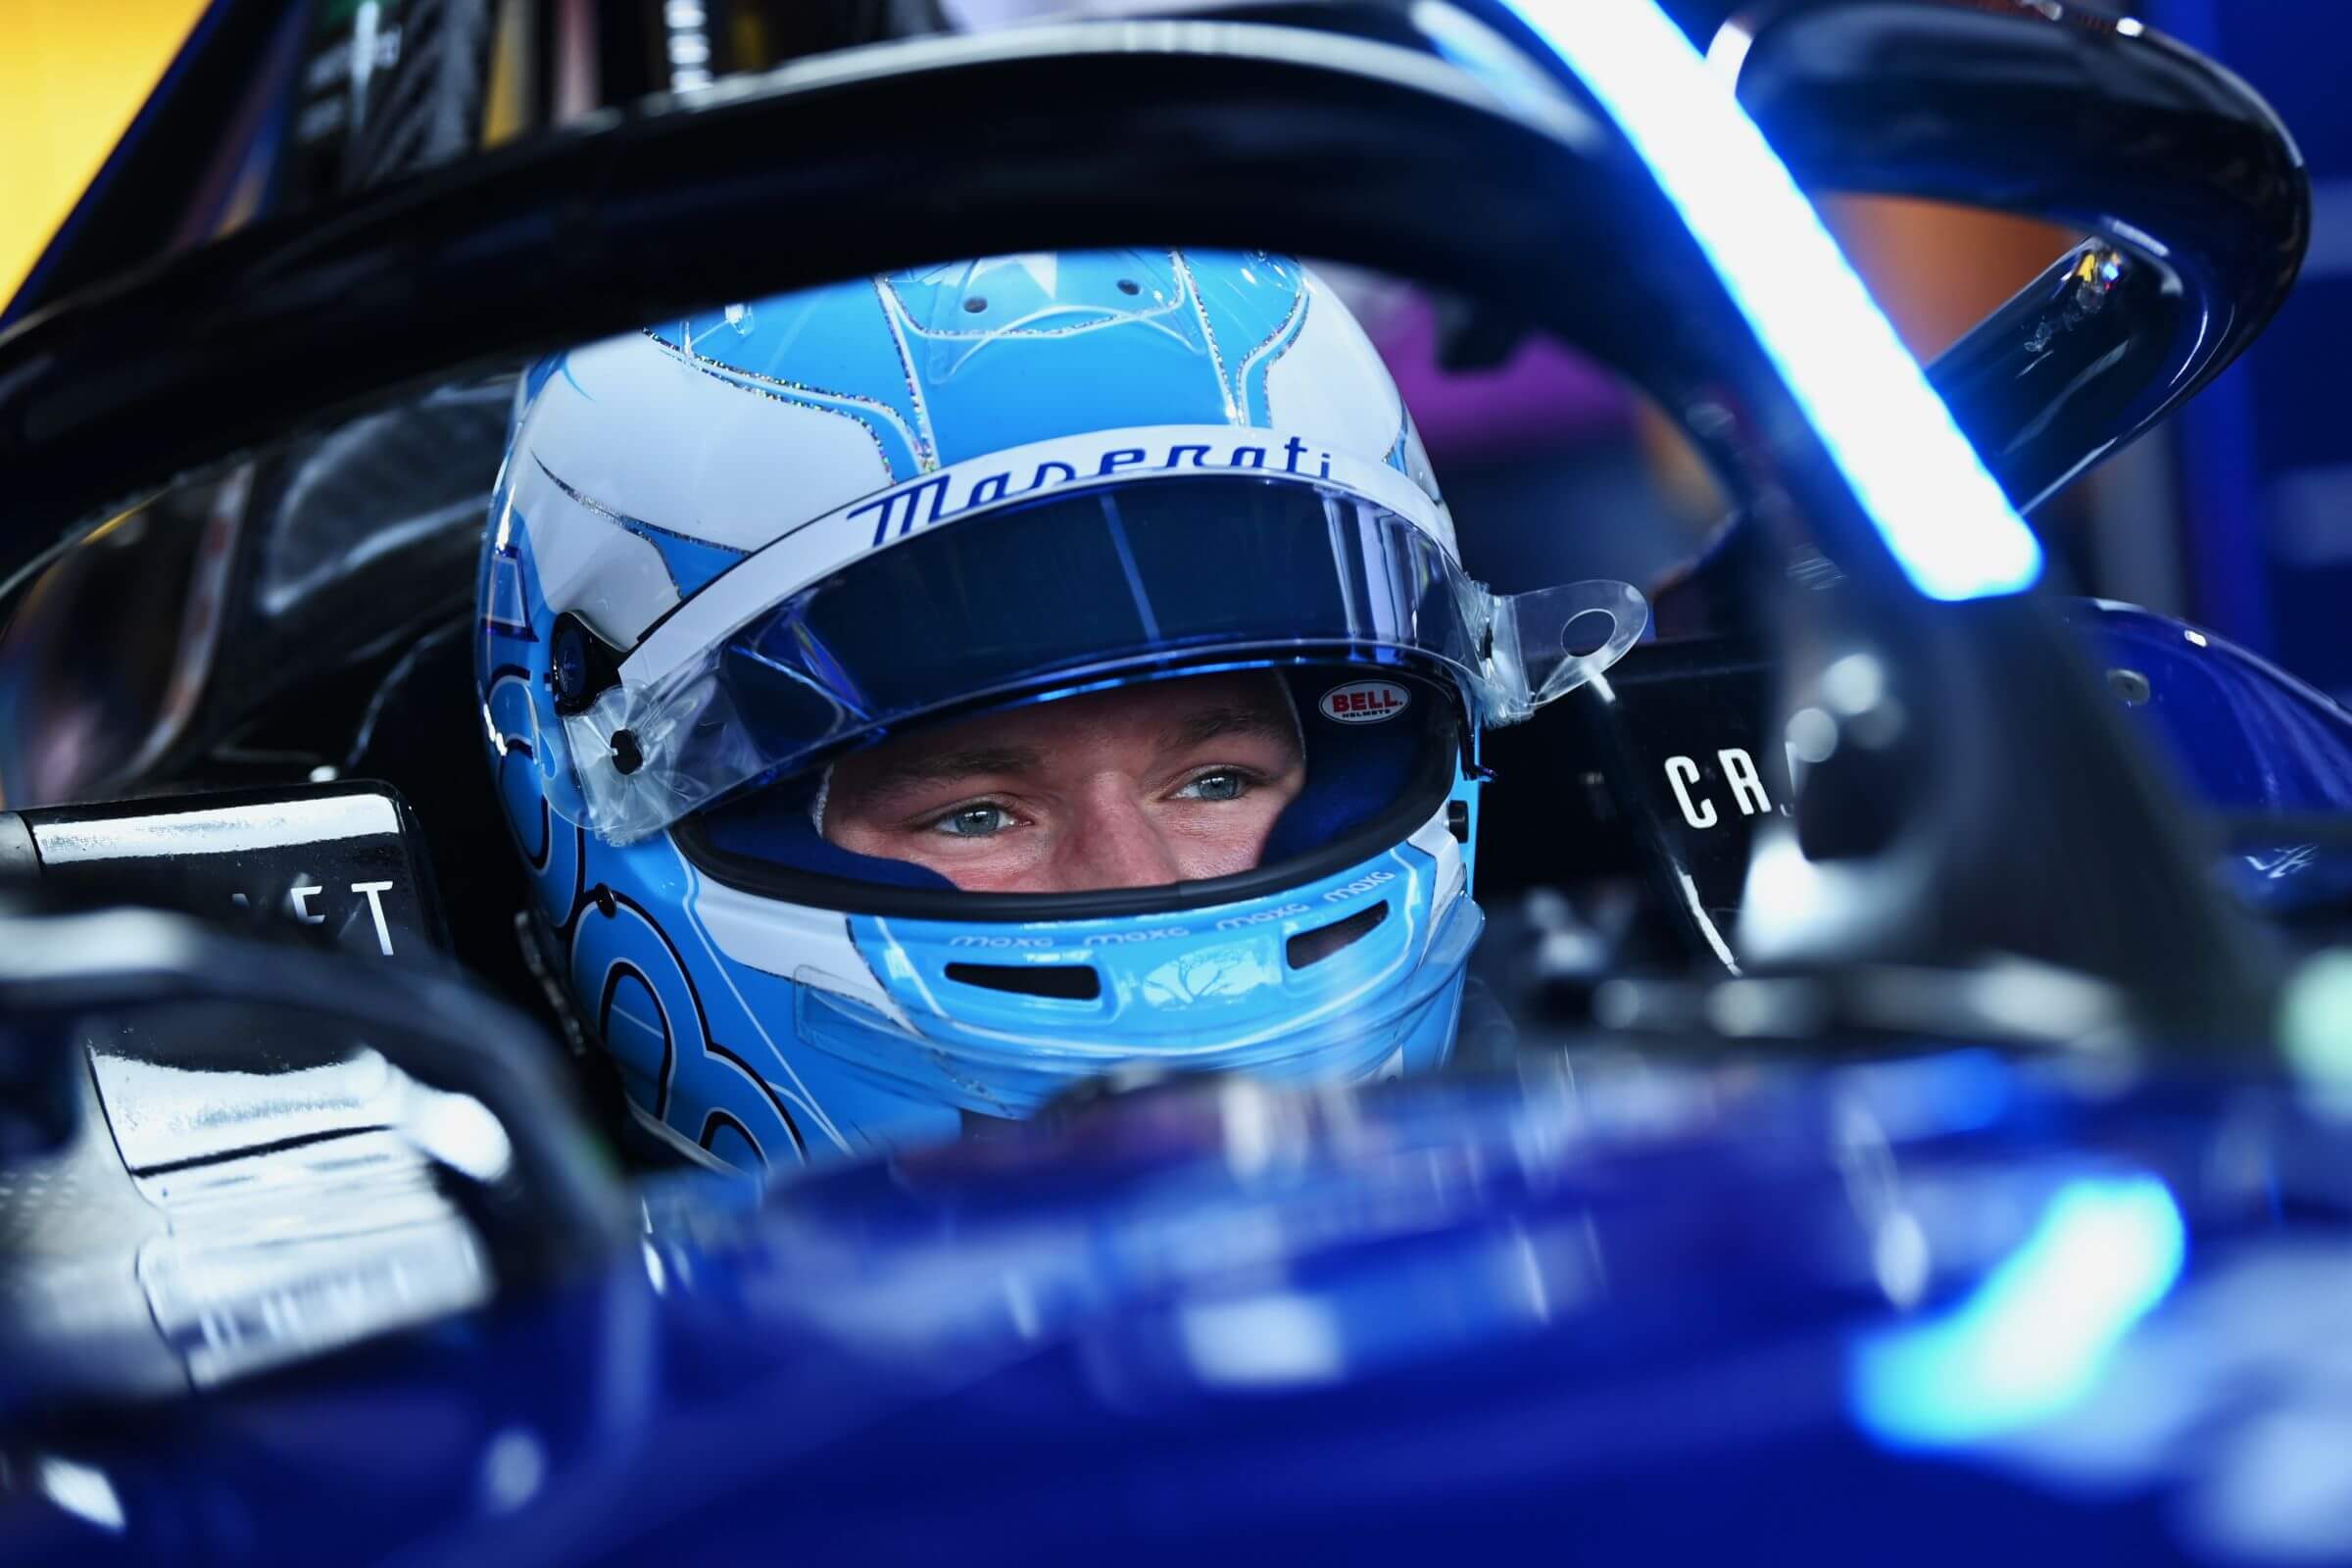 Max-Günther-Cockpit-blauer-Helm-Formel-E